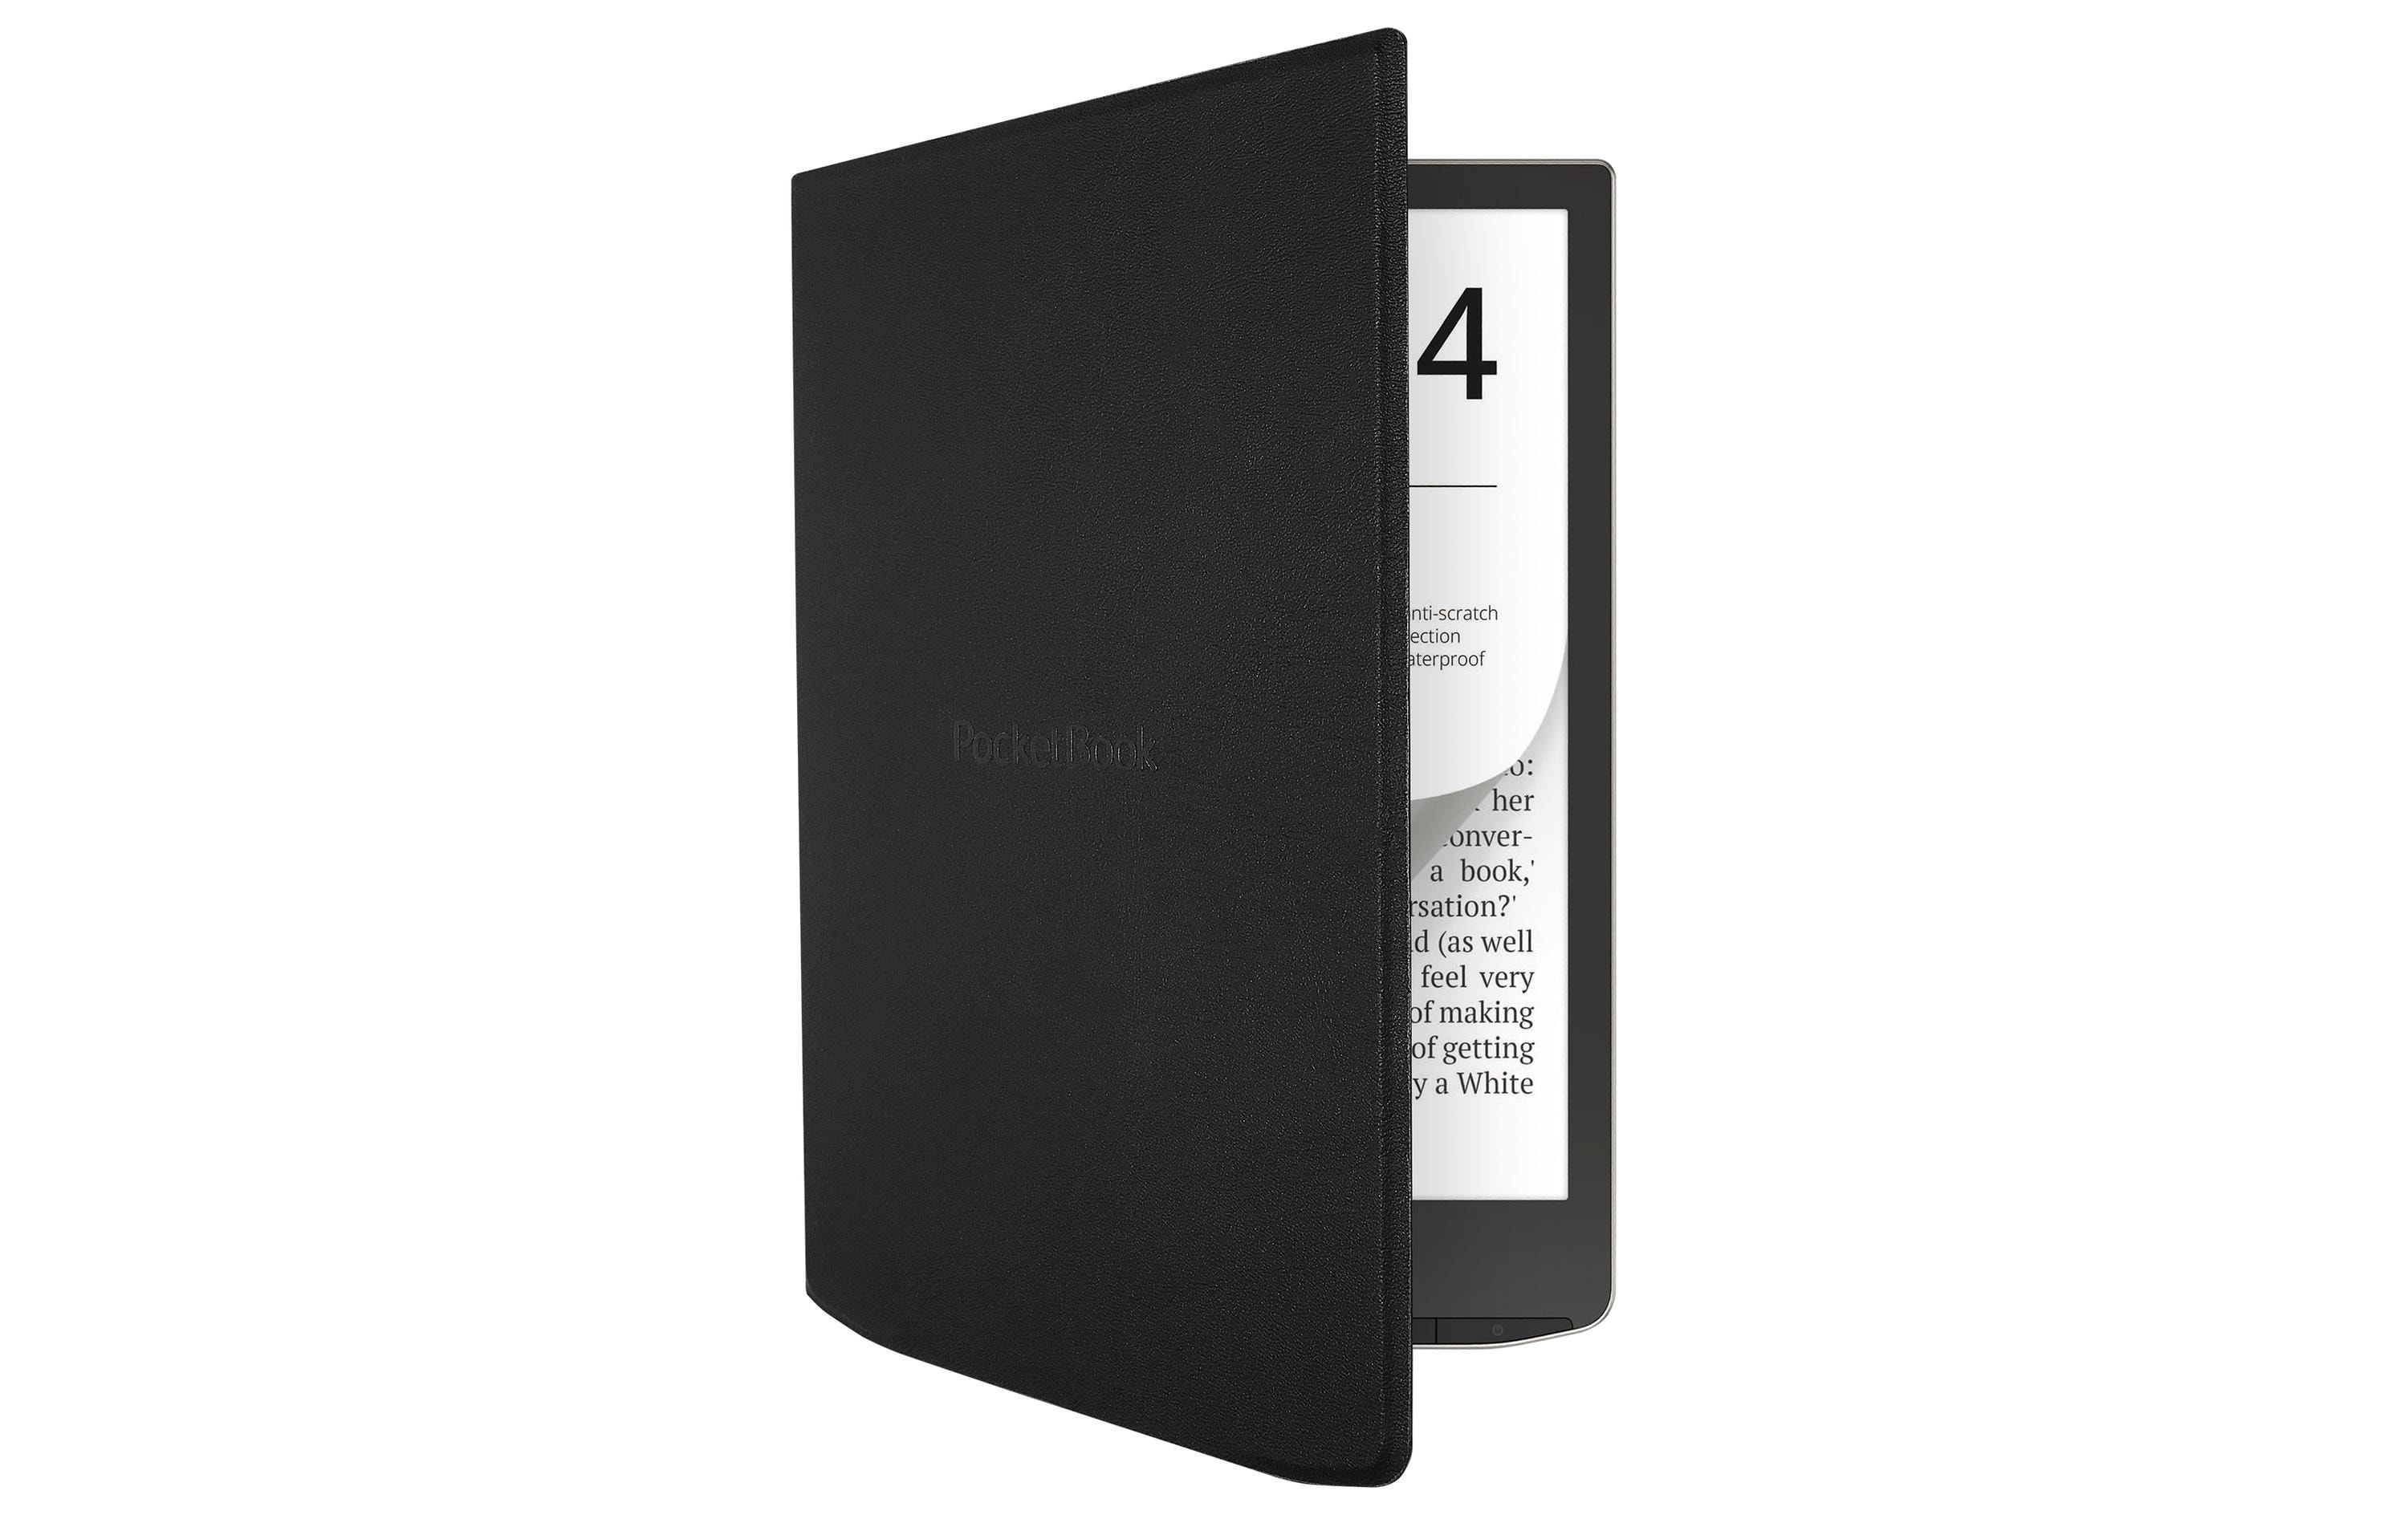 PocketBook Flip Cover InkPad 4 / InkPad Color 2